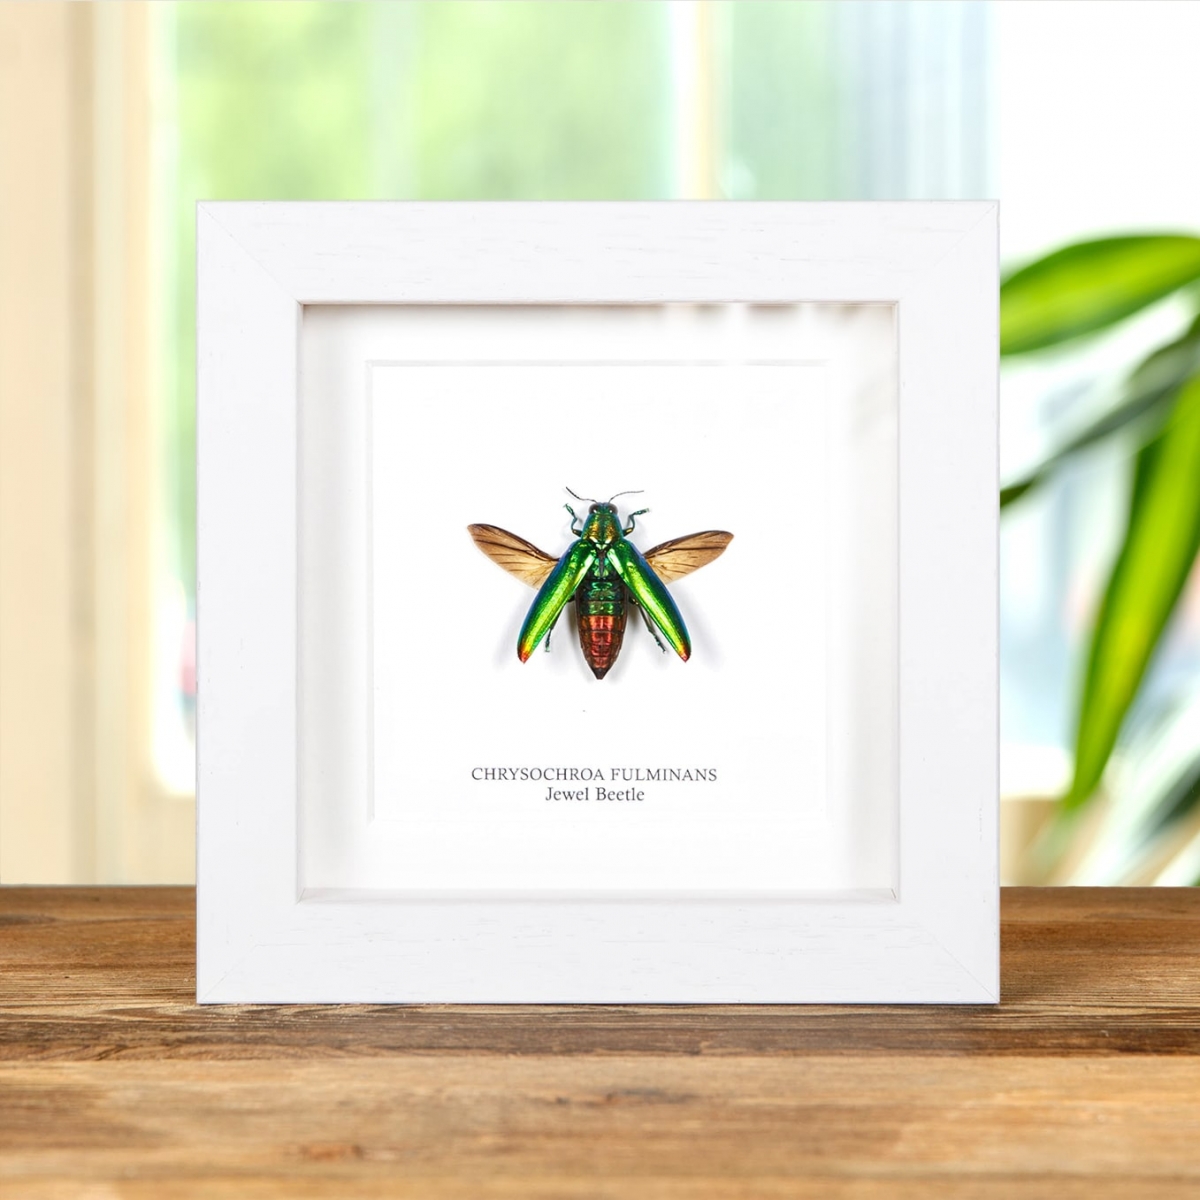 Jewel Beetle In Box Frame (Chrysochroa fulminans)